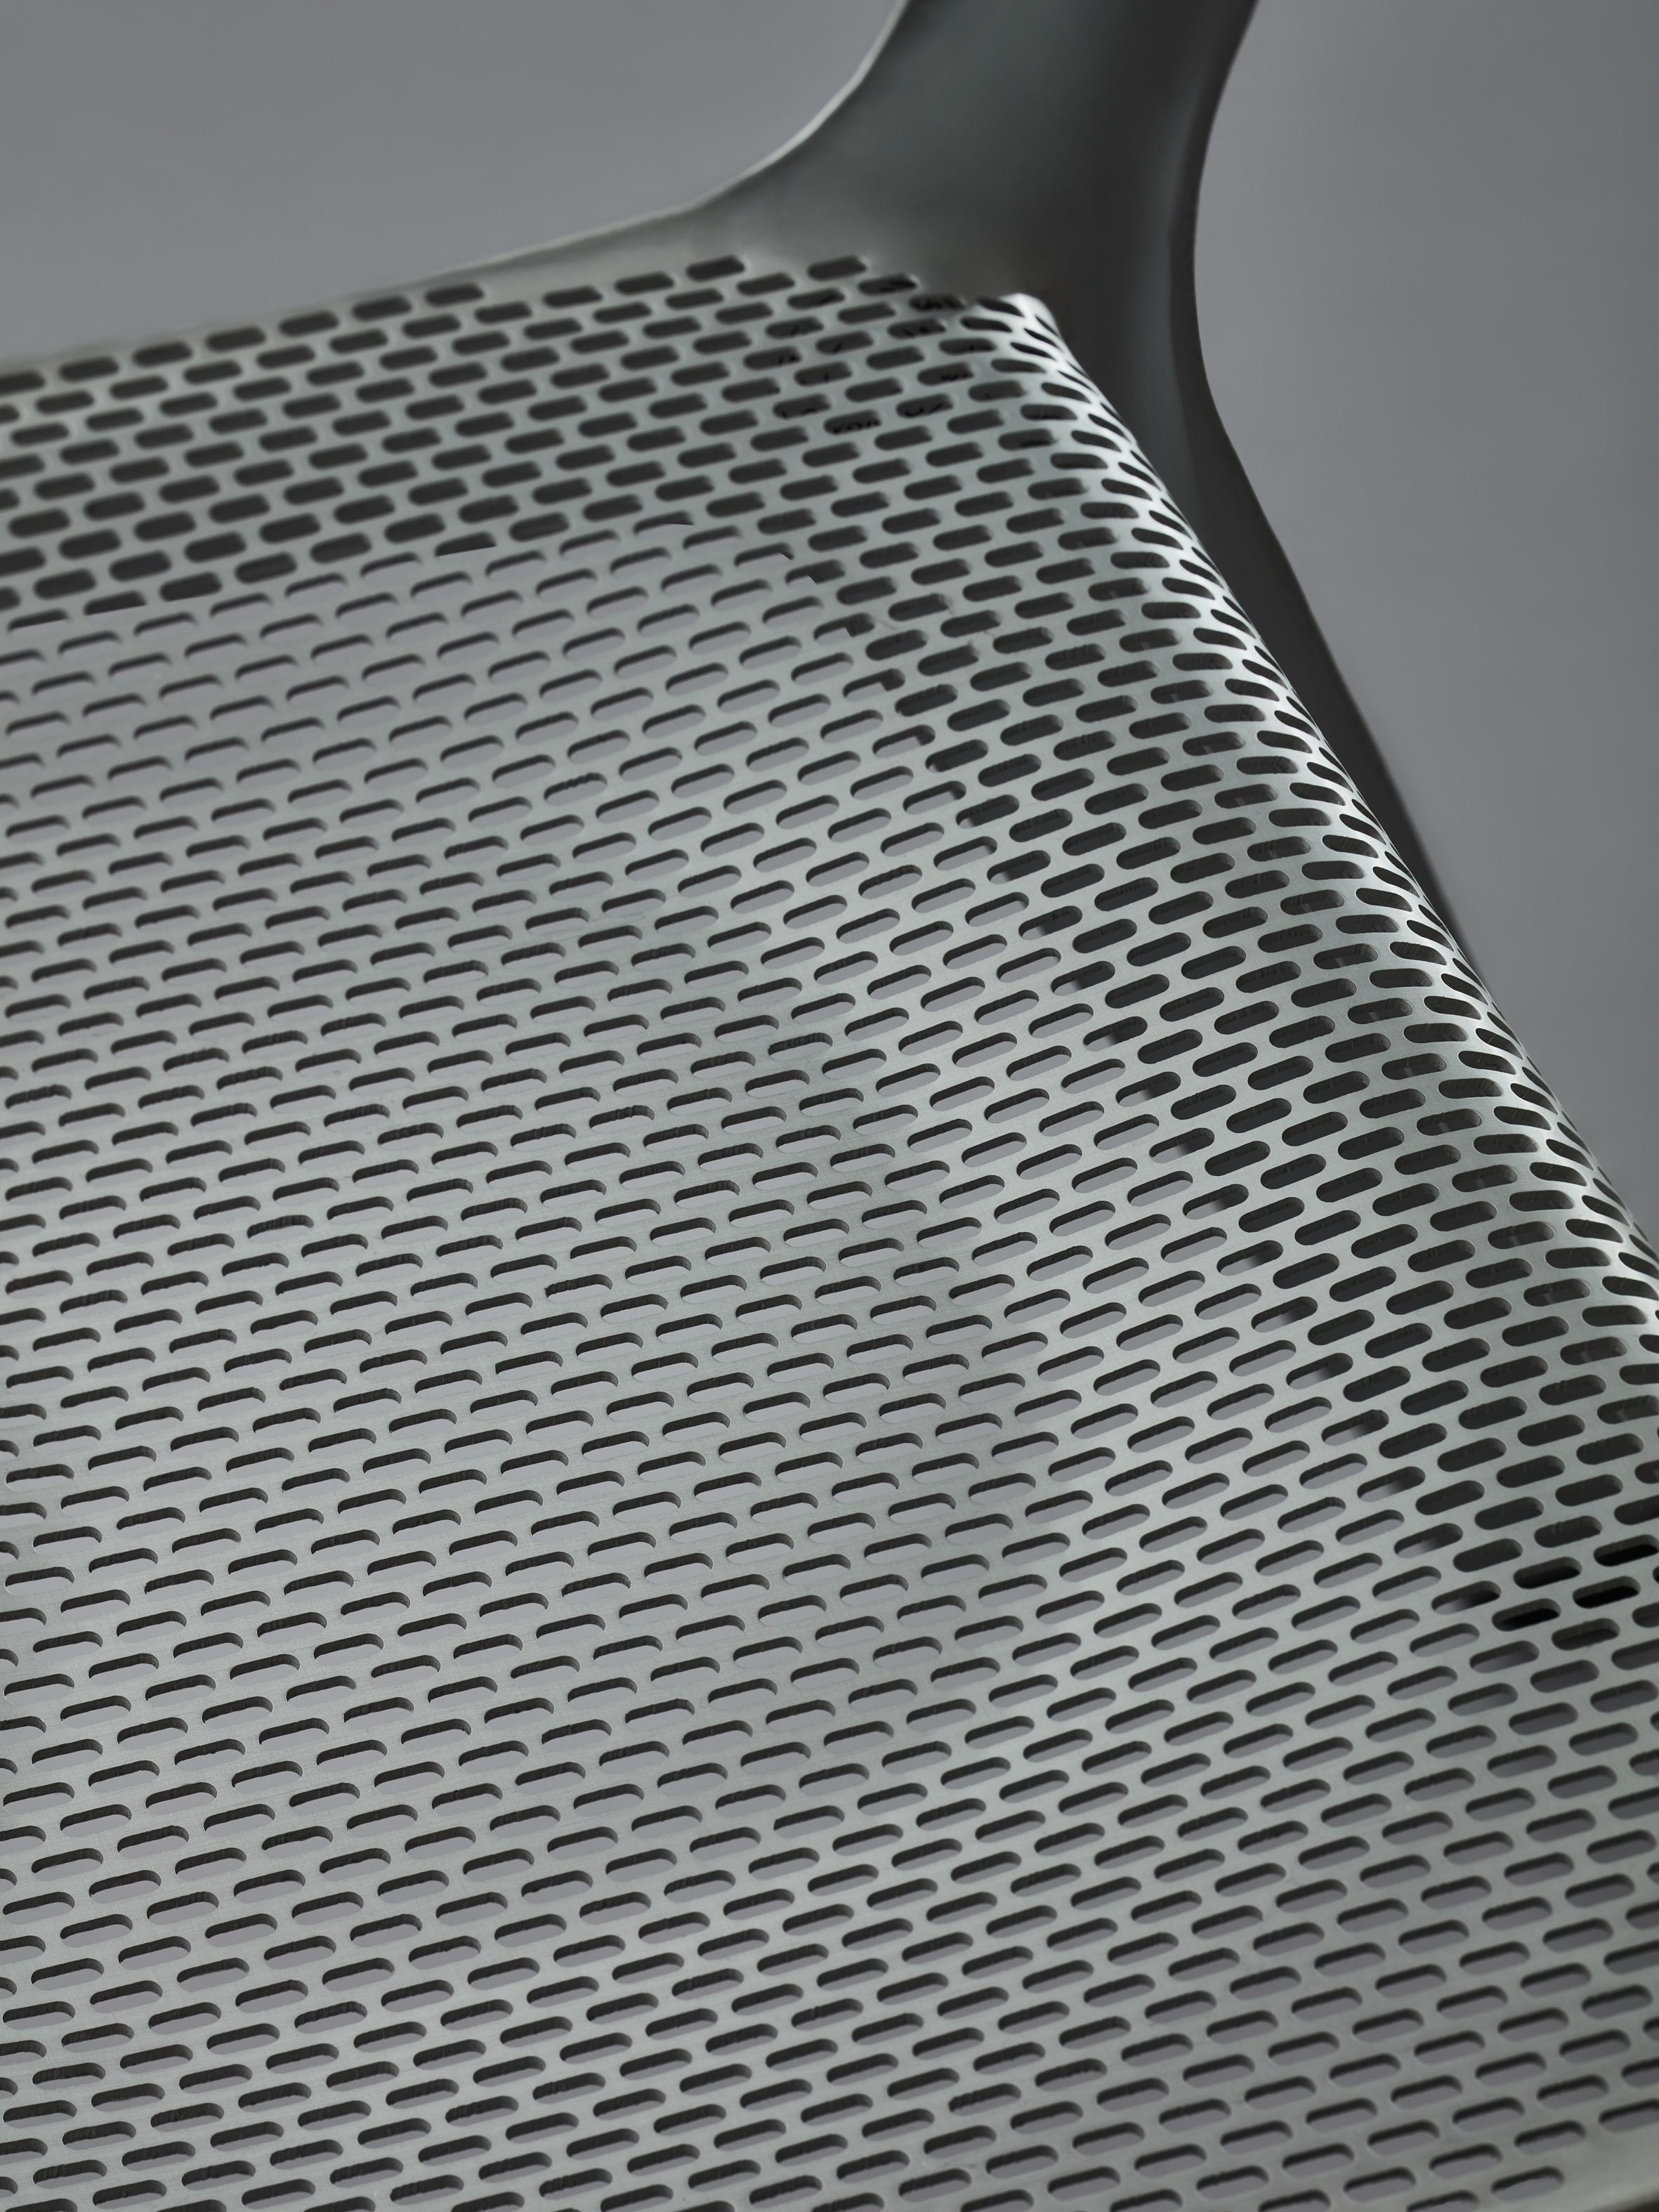 Contemporary Natural Anodic Ultraleggera Chair by Zieta For Sale